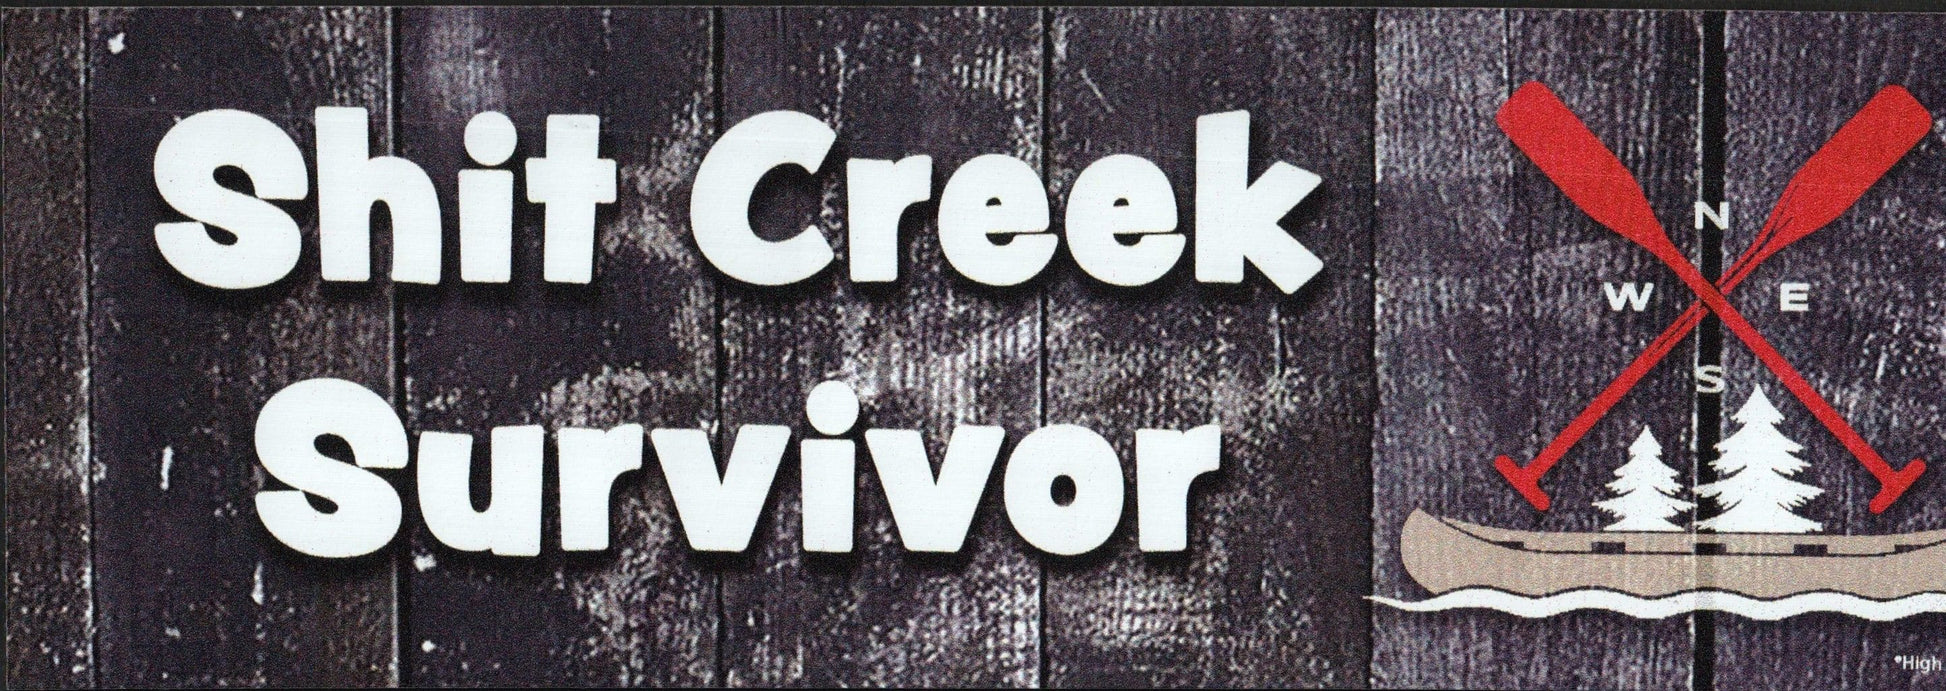 Bumper Magnet - Creek Survivor - Shelburne Country Store